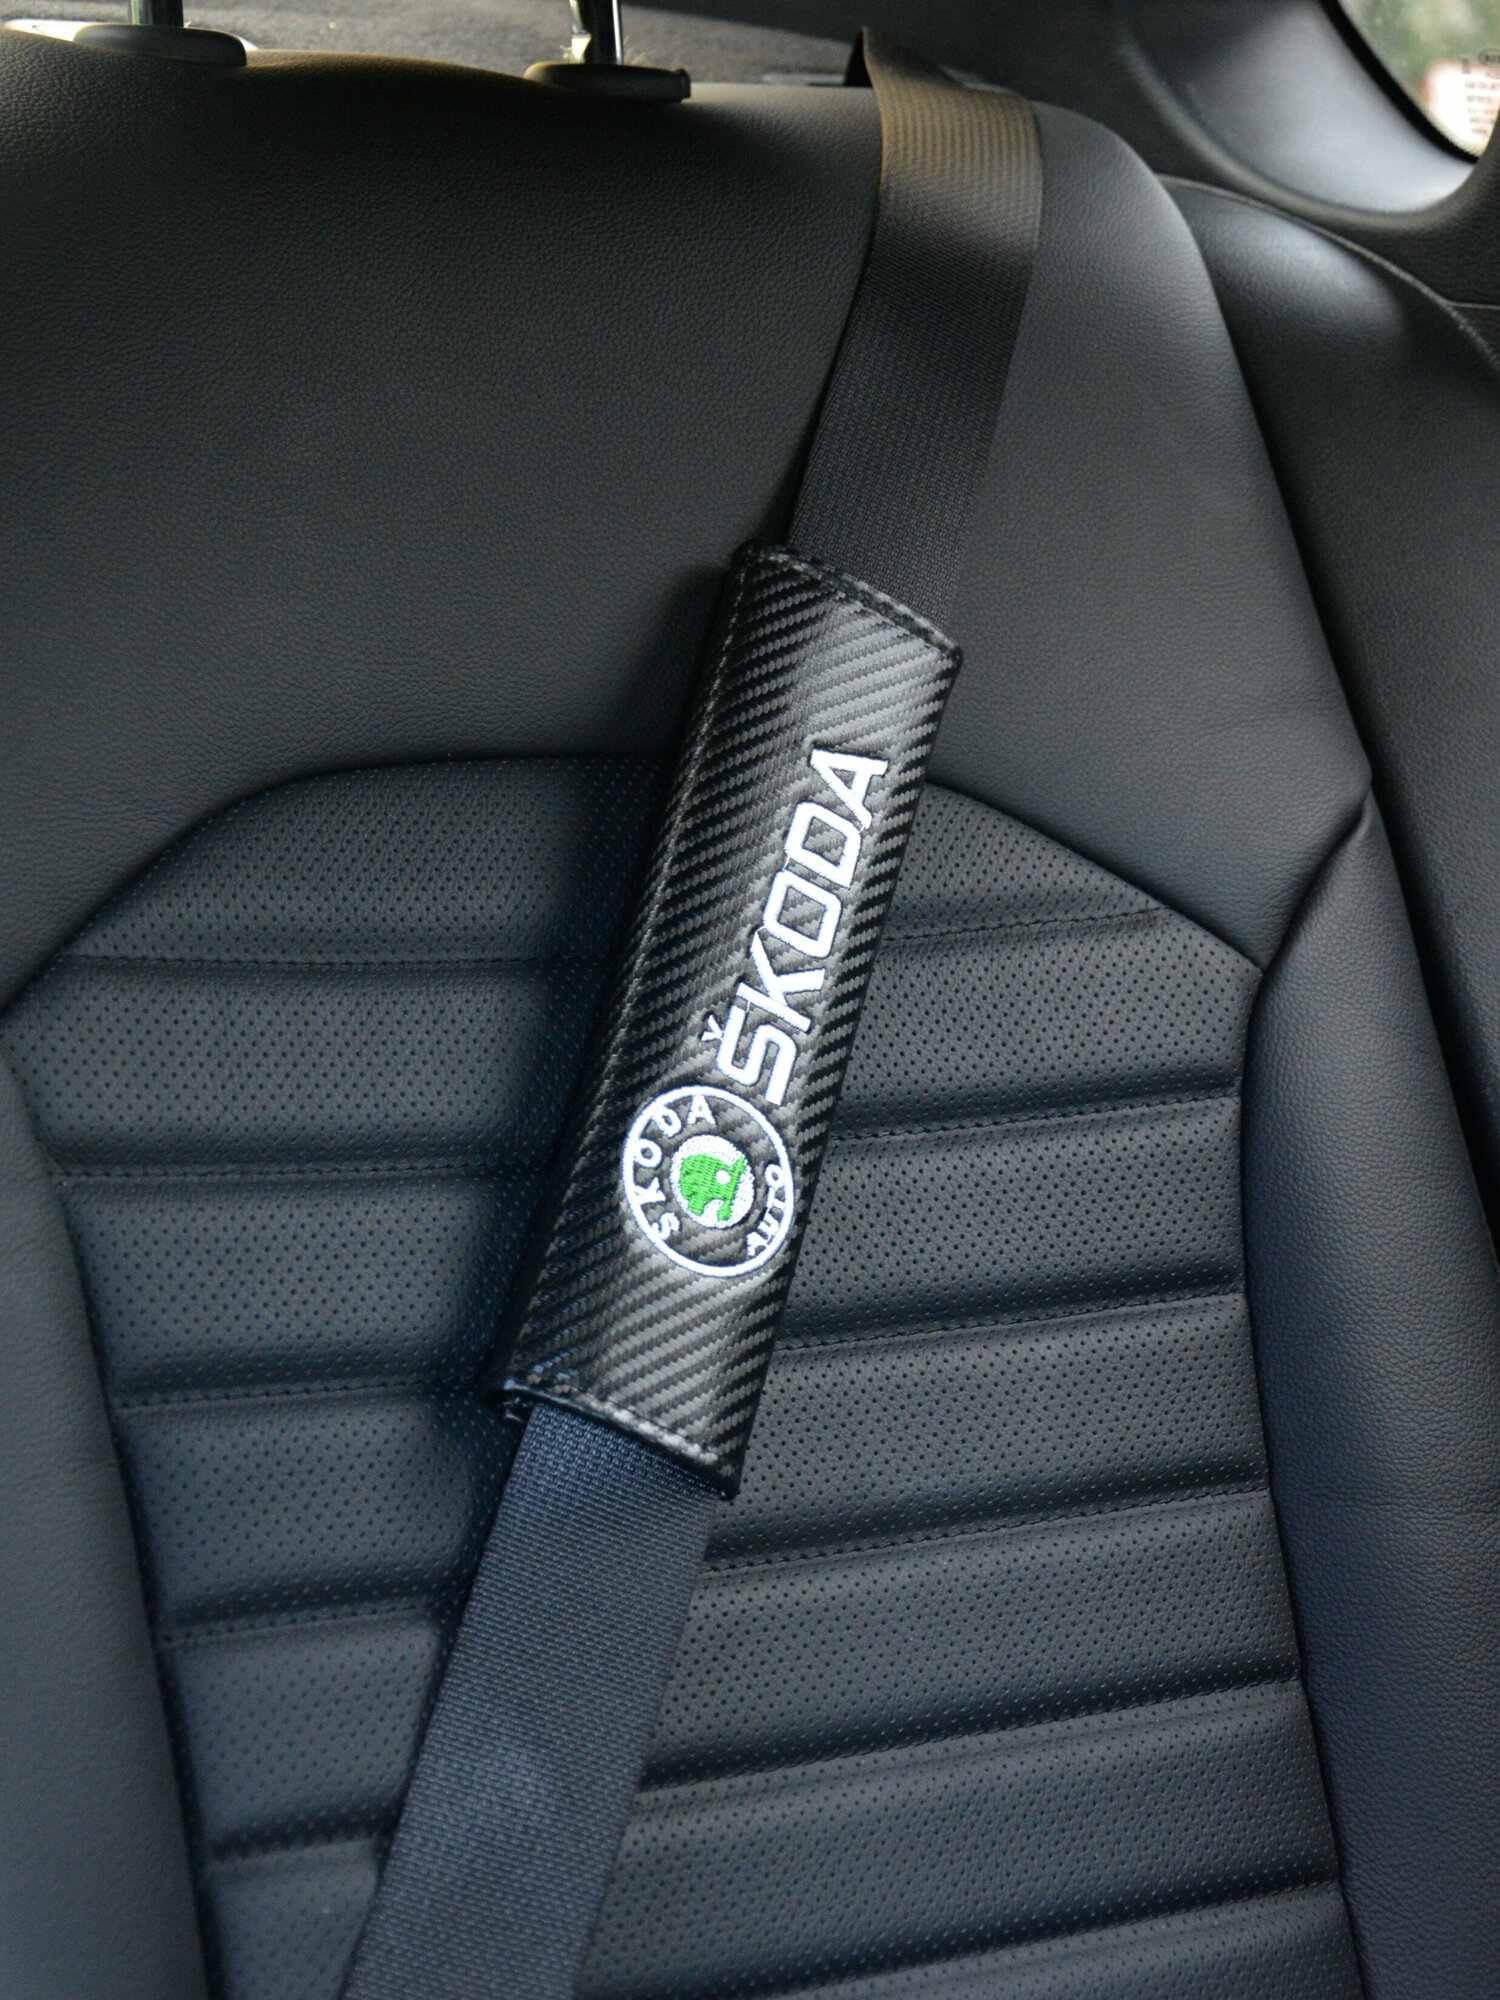 Чехол на ремень безопасности автомобиля (2) мягкая подкладка на ремень сумки накидка на плечо насадка накладка для авто логотип "Skoda"